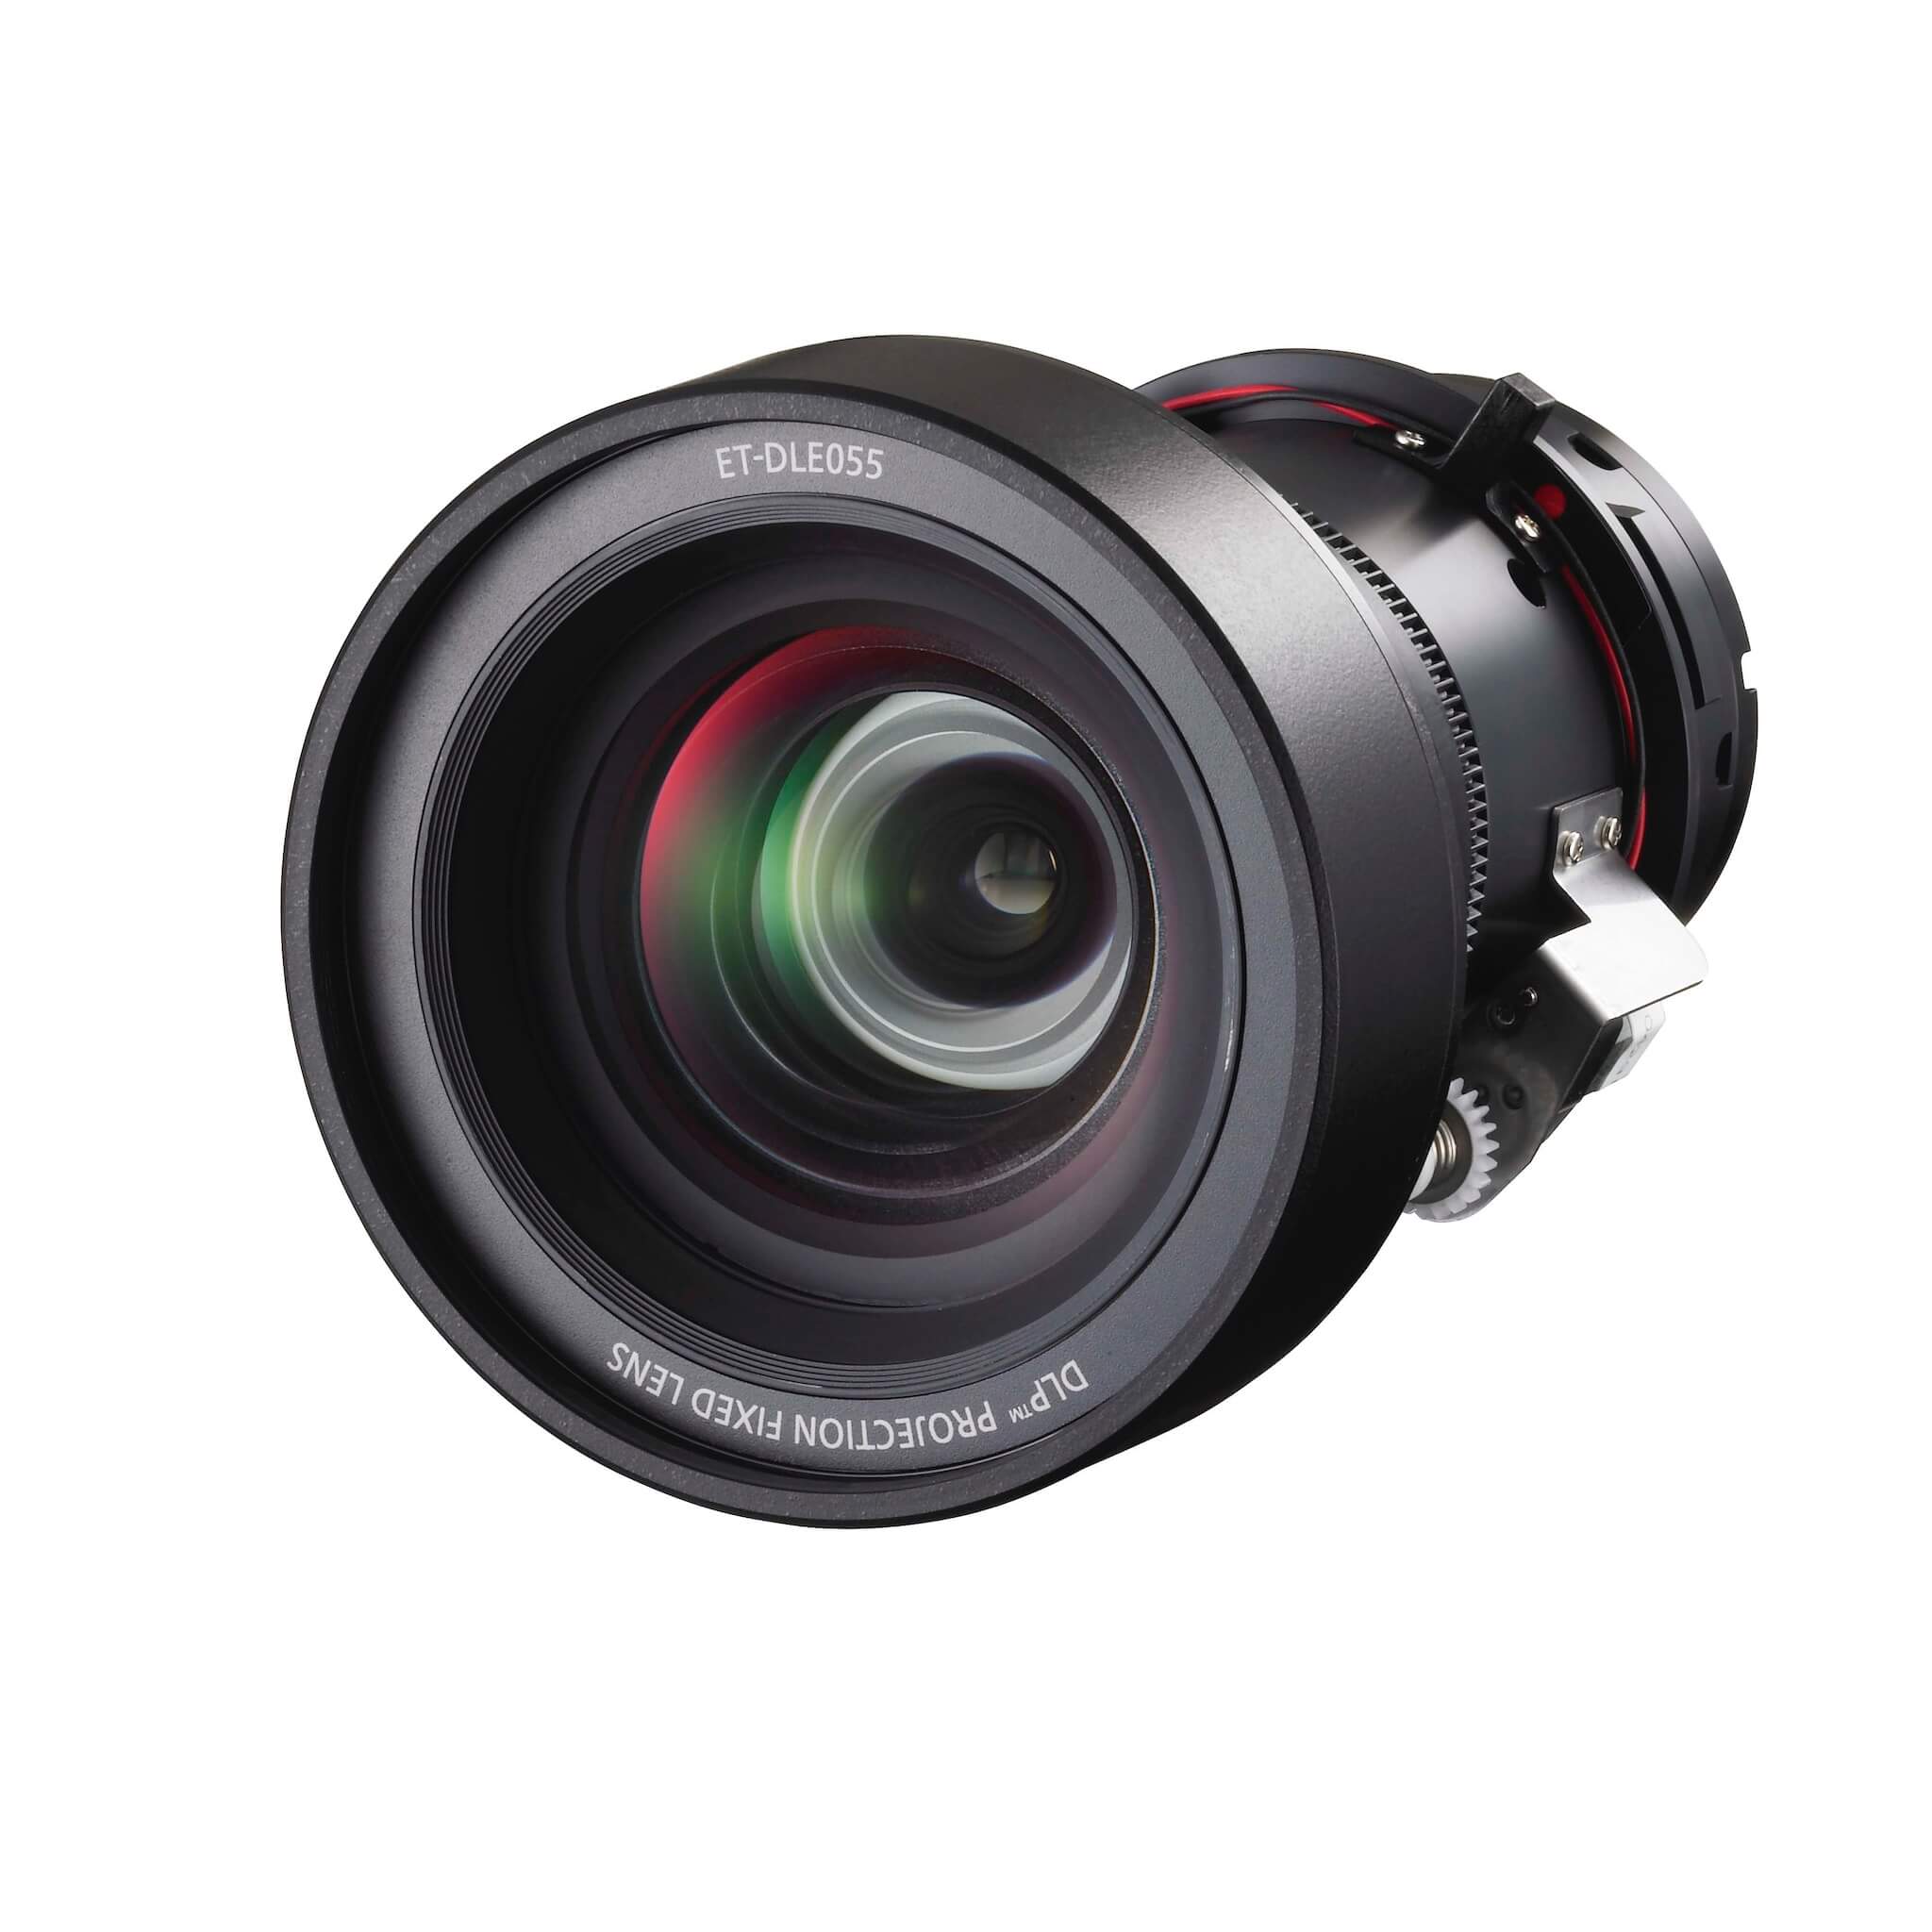 Panasonic ET-DLE055 Projector Fixed-Focus Lens 0.8-1.0 :1